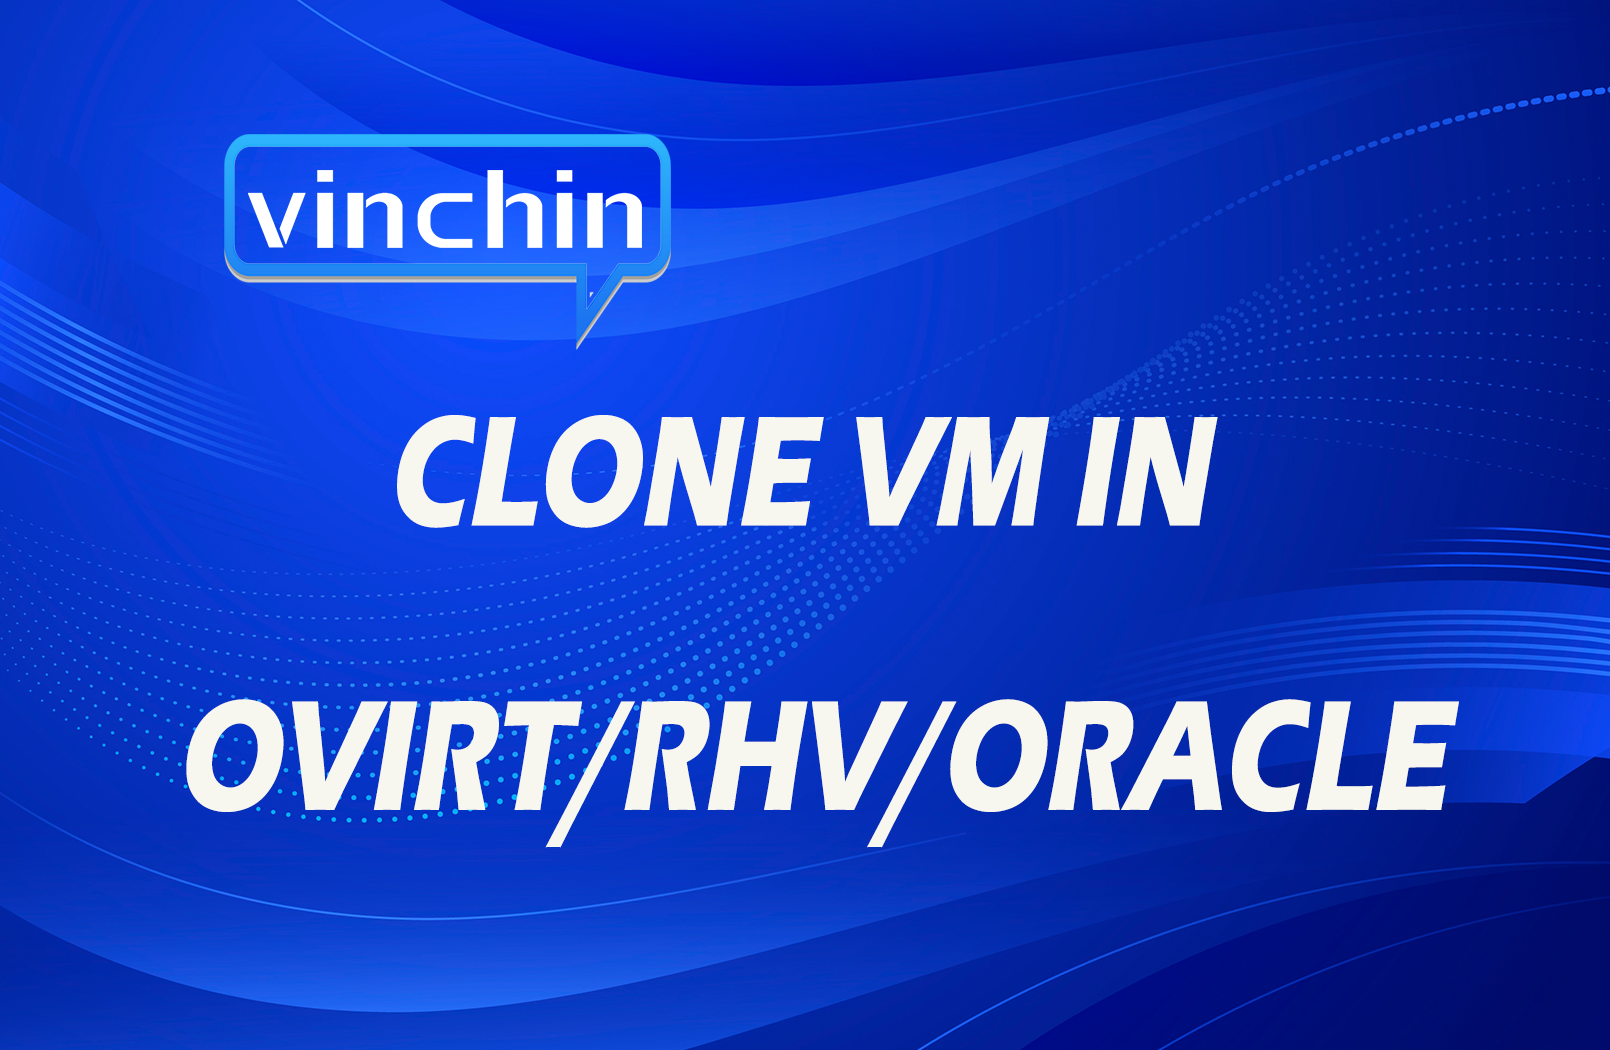 How to Clone Virtual Machine in oVirt/RHV/Oracle Easily?